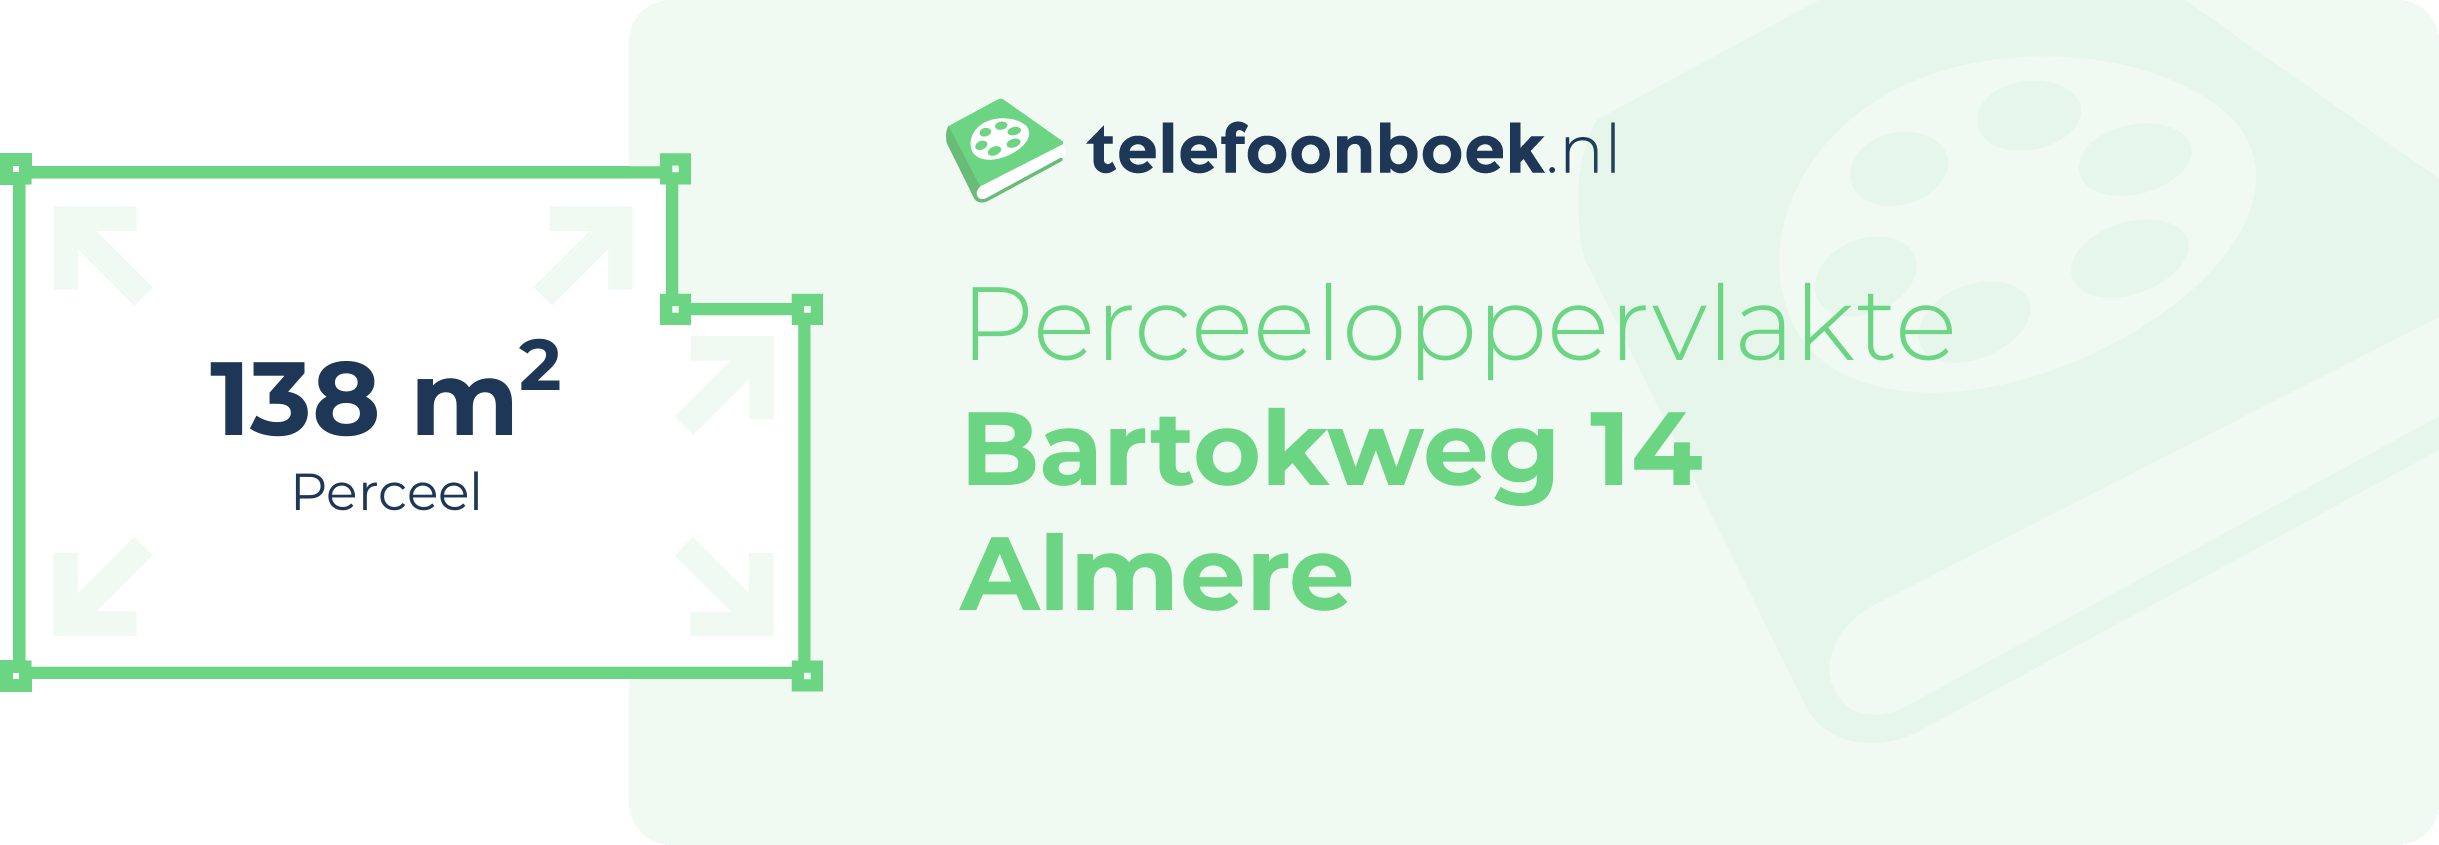 Perceeloppervlakte Bartokweg 14 Almere